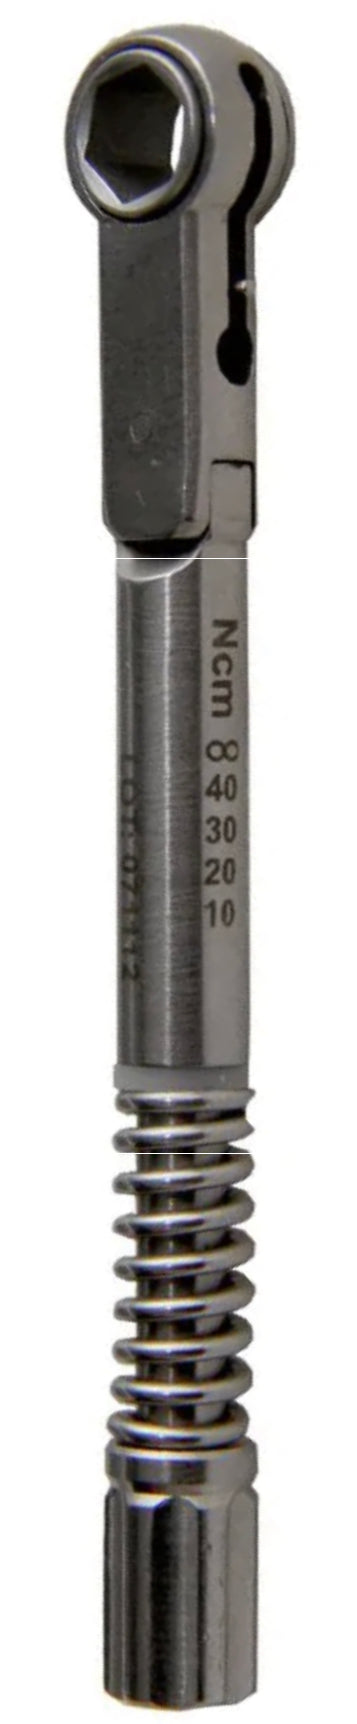 Dental Implant Torque Ratchet Wrench Tool TOP German Quality, 6.35 Mm , 10-45 NCM